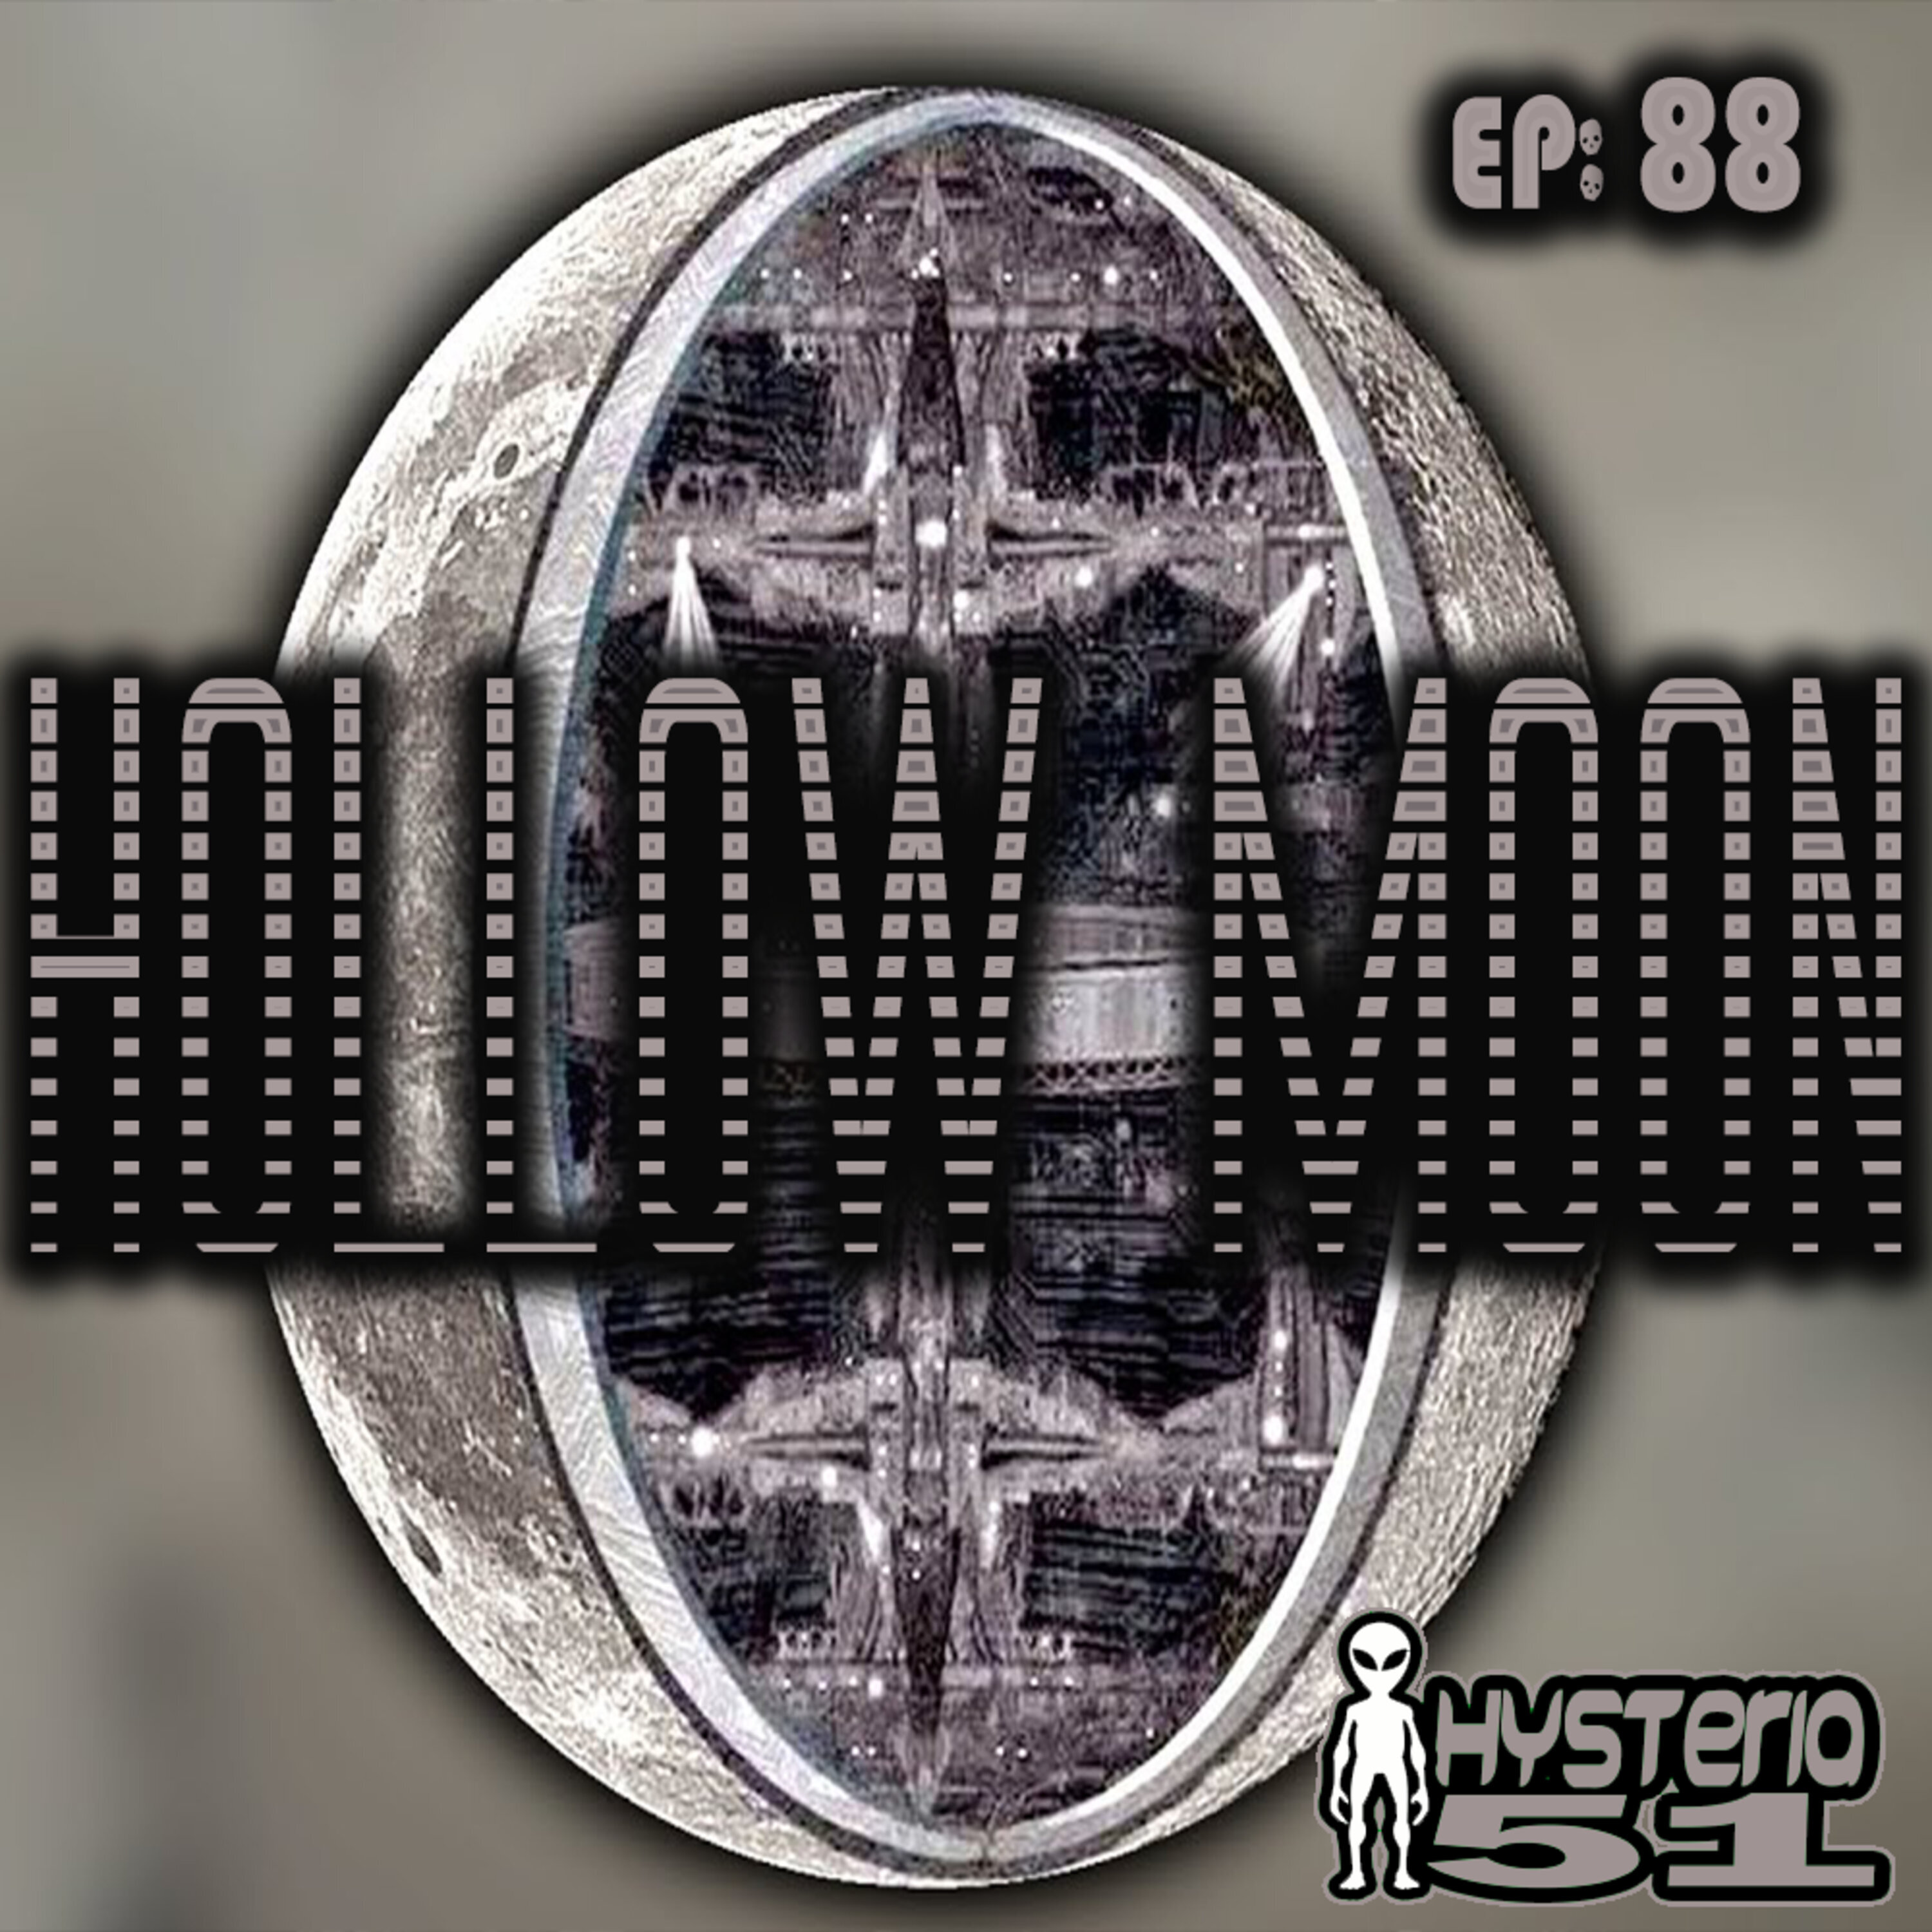 Hollow Moon: Alien Spacecraft or Plain Planetoid  | 88